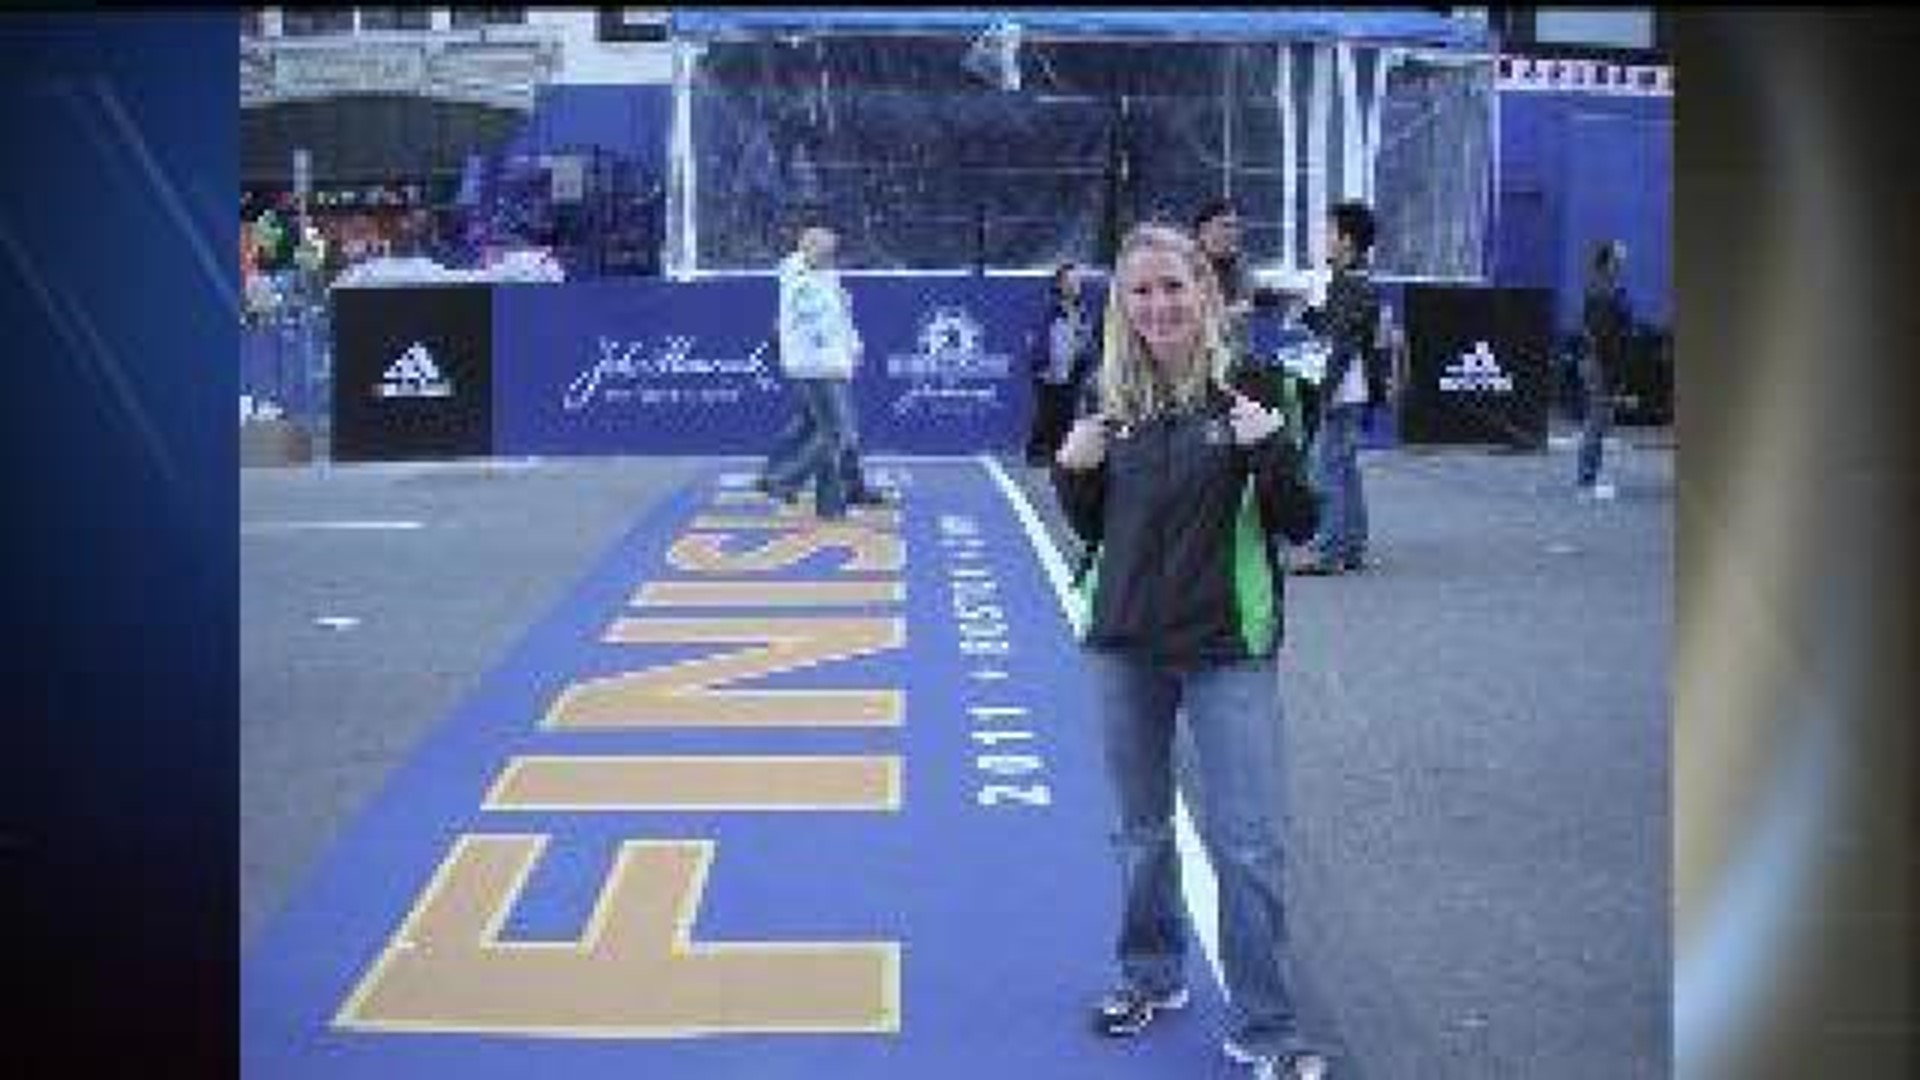 Local runner goes back to Boston for fourth marathon